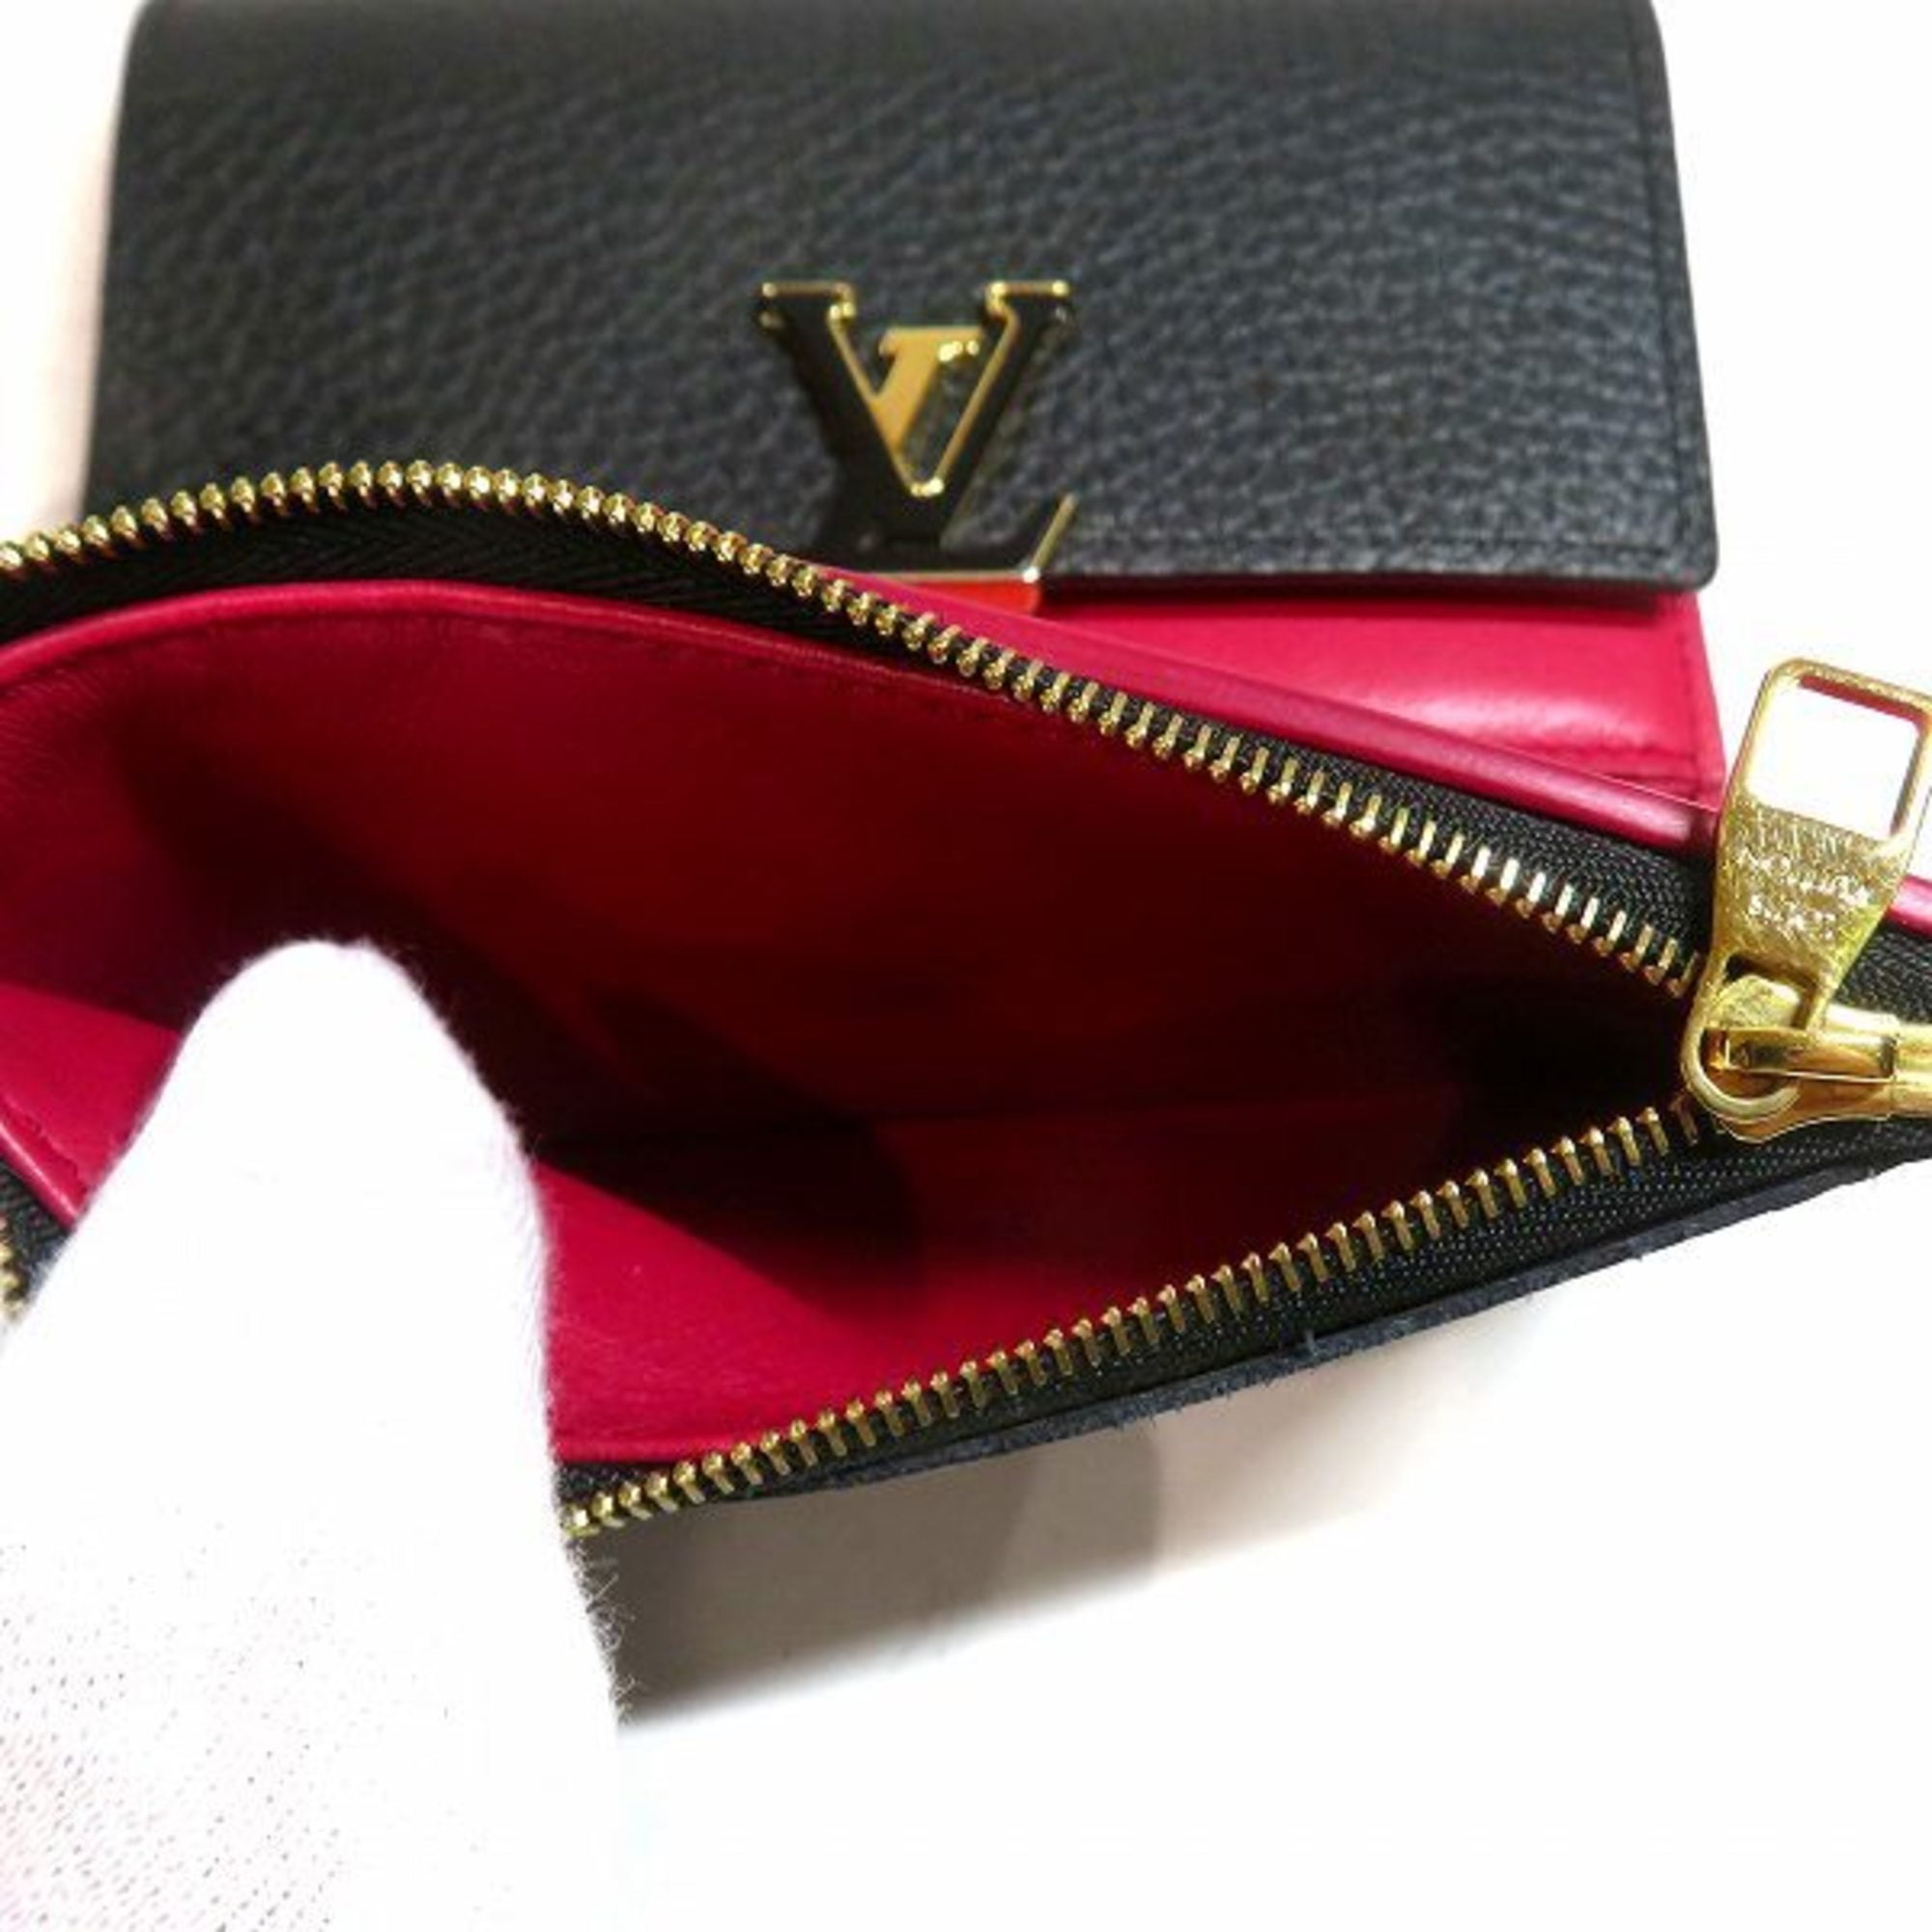 Louis Vuitton - Authenticated Capucines Handbag - Leather Black Plain for Women, Very Good Condition